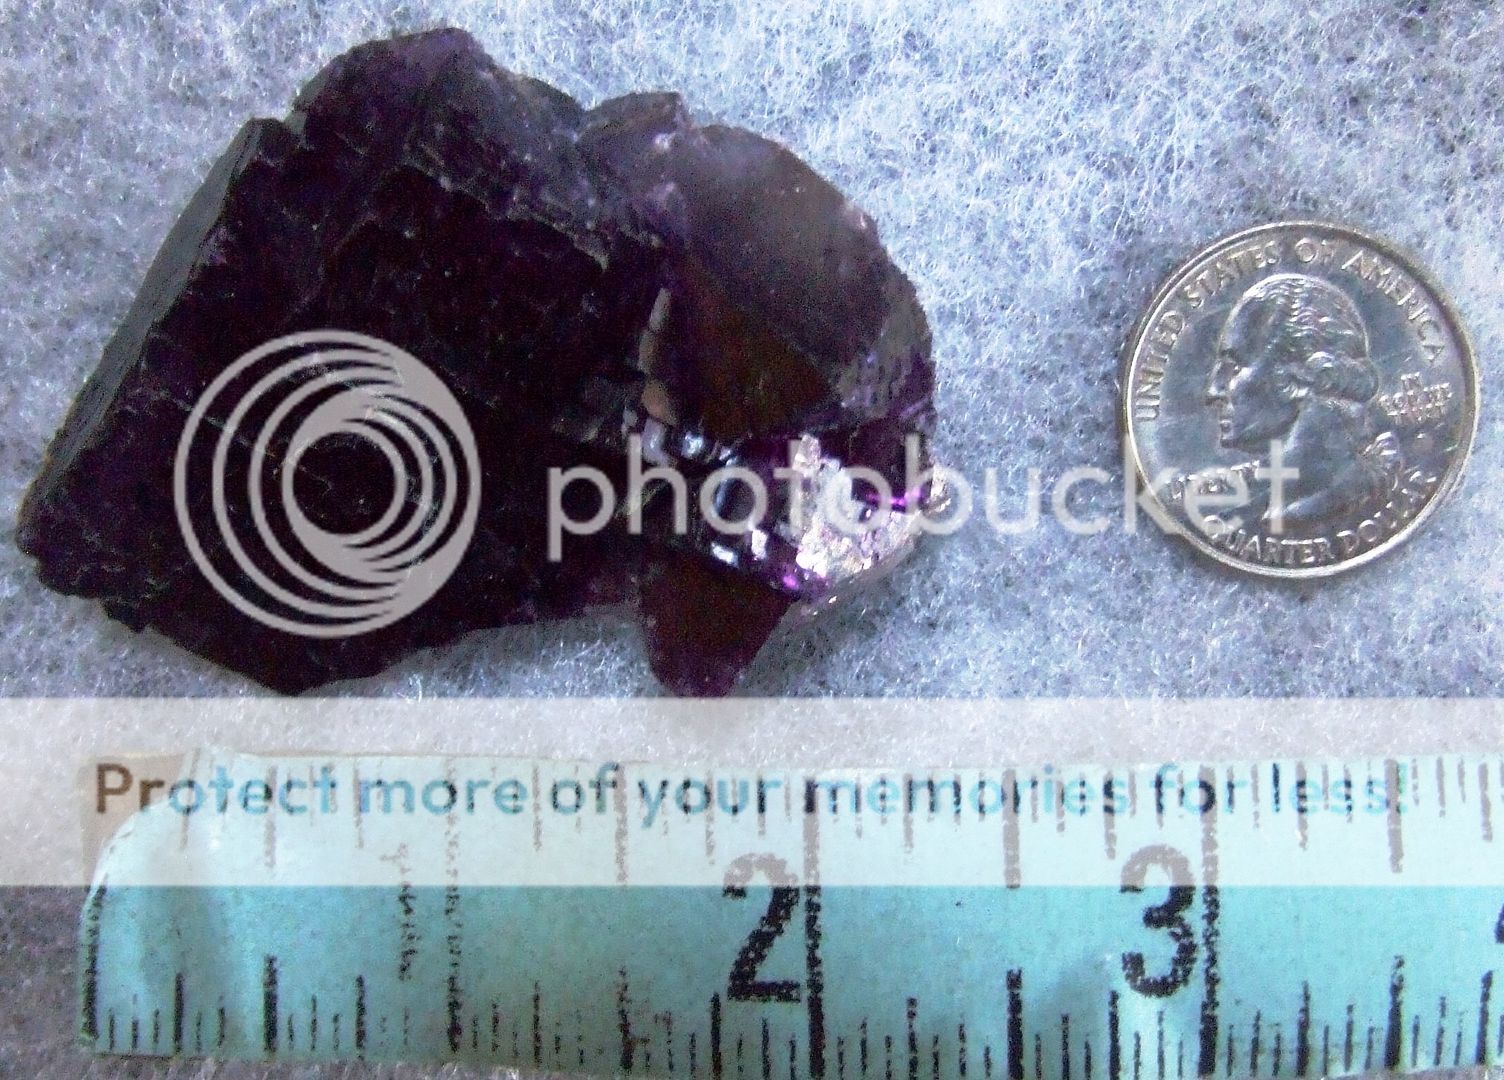 Purple Fluorite Crystal Mineral Specimen from Musqui Mexico 2 1/2 x 2 